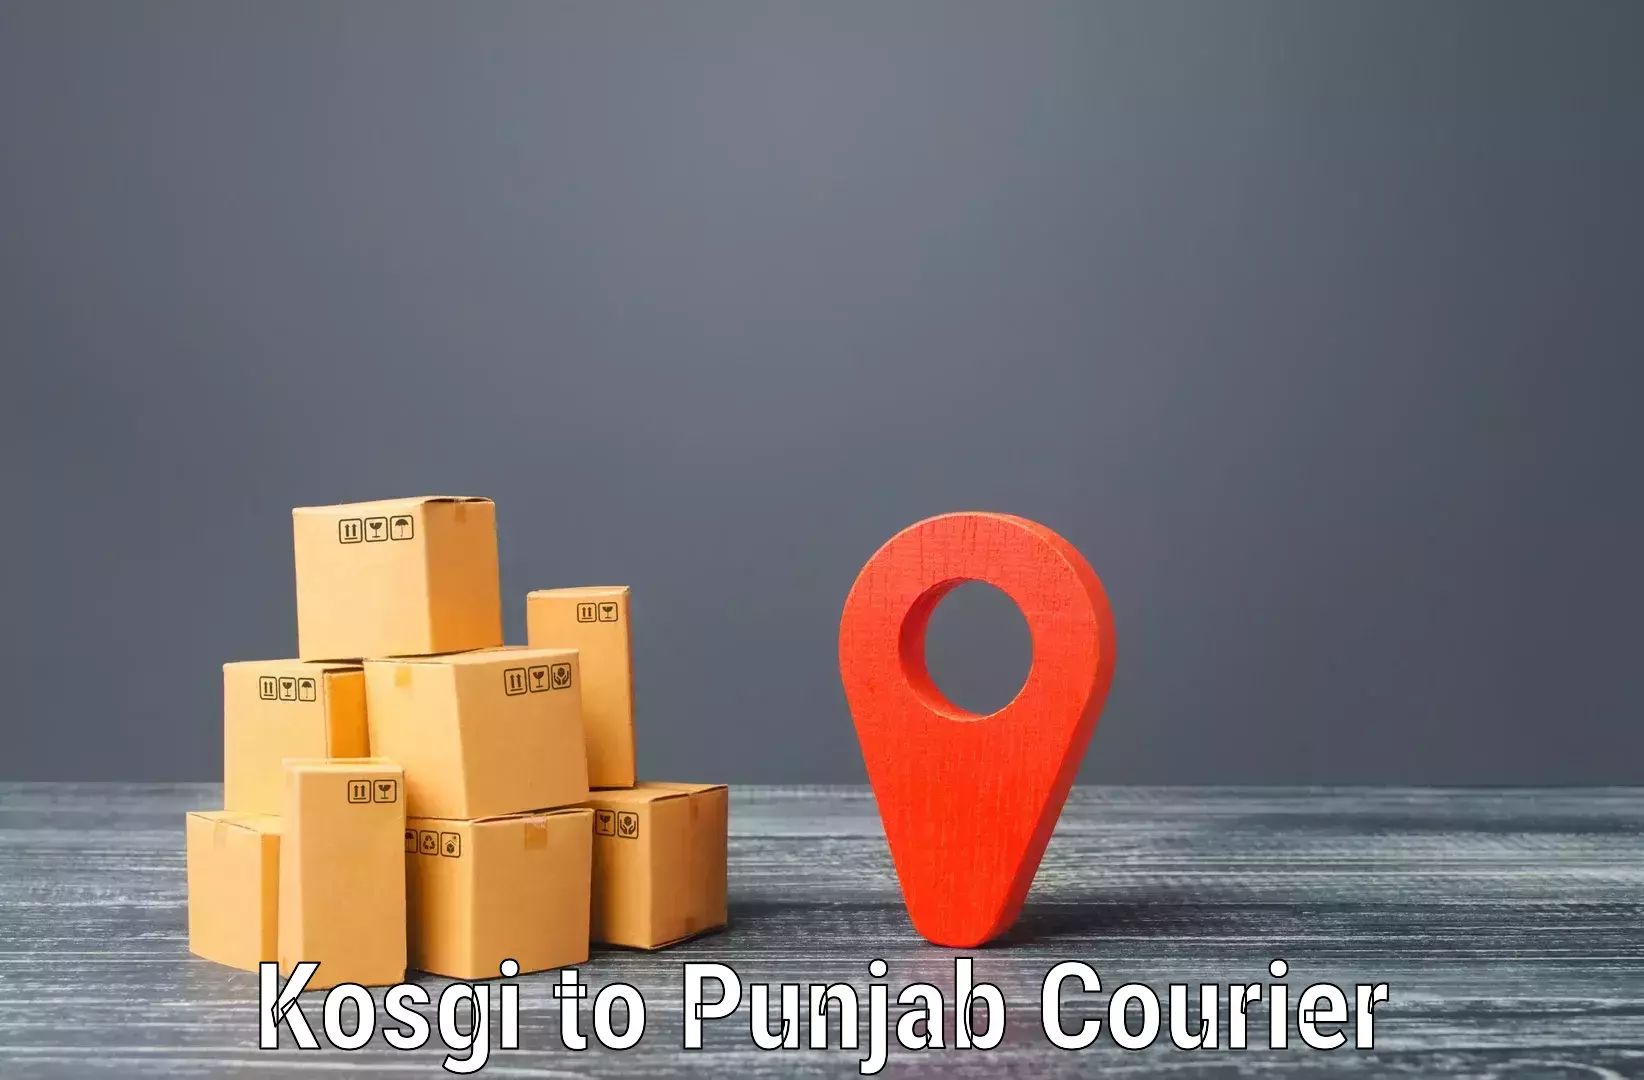 Advanced courier platforms Kosgi to Zirakpur